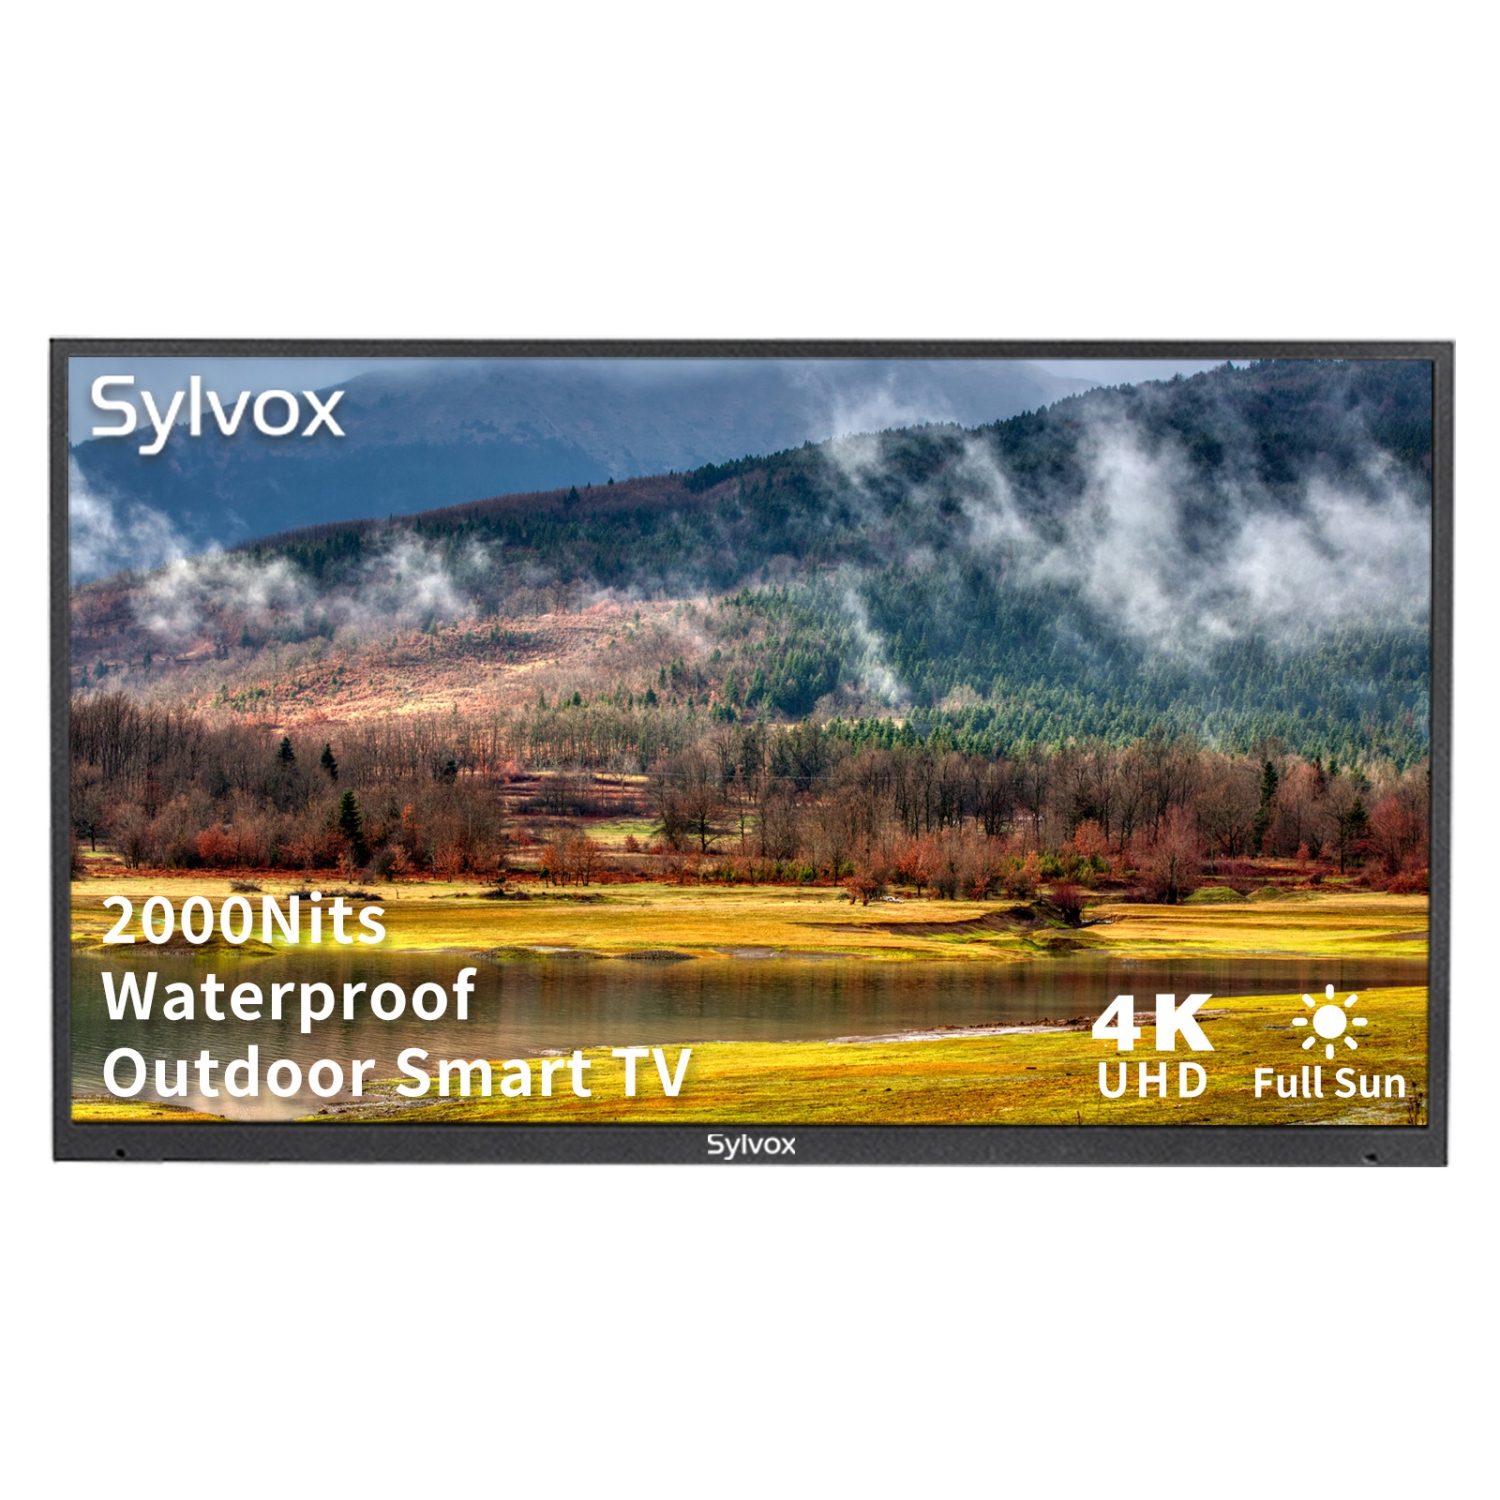 SYLVOX 43" Outdoor TV, 2000 nits Full Sun Outdoor Smart TV, IP55 Waterproof, Built-in Apps, Support Bluetooth & 2.4G WiFi (Pool Series)